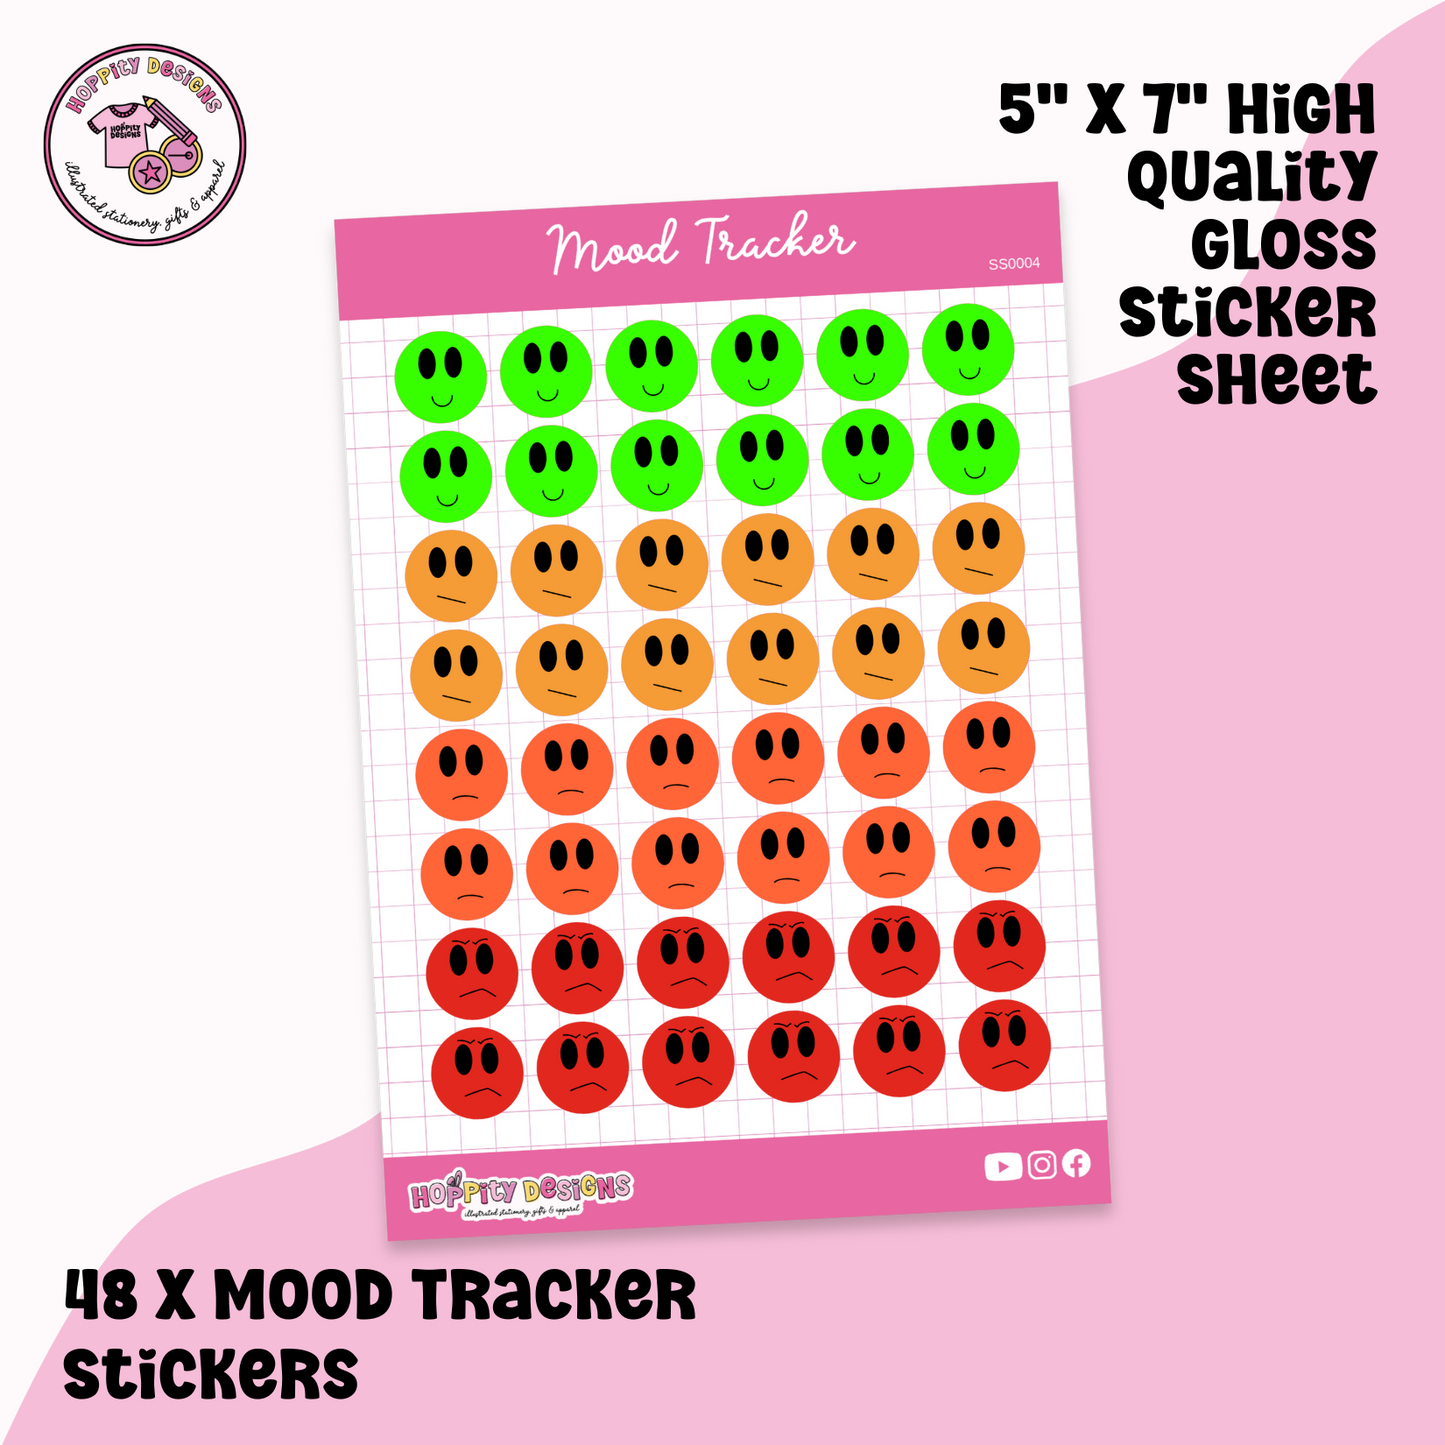 Mood Tracker Planner Sticker Sheet - SS0004